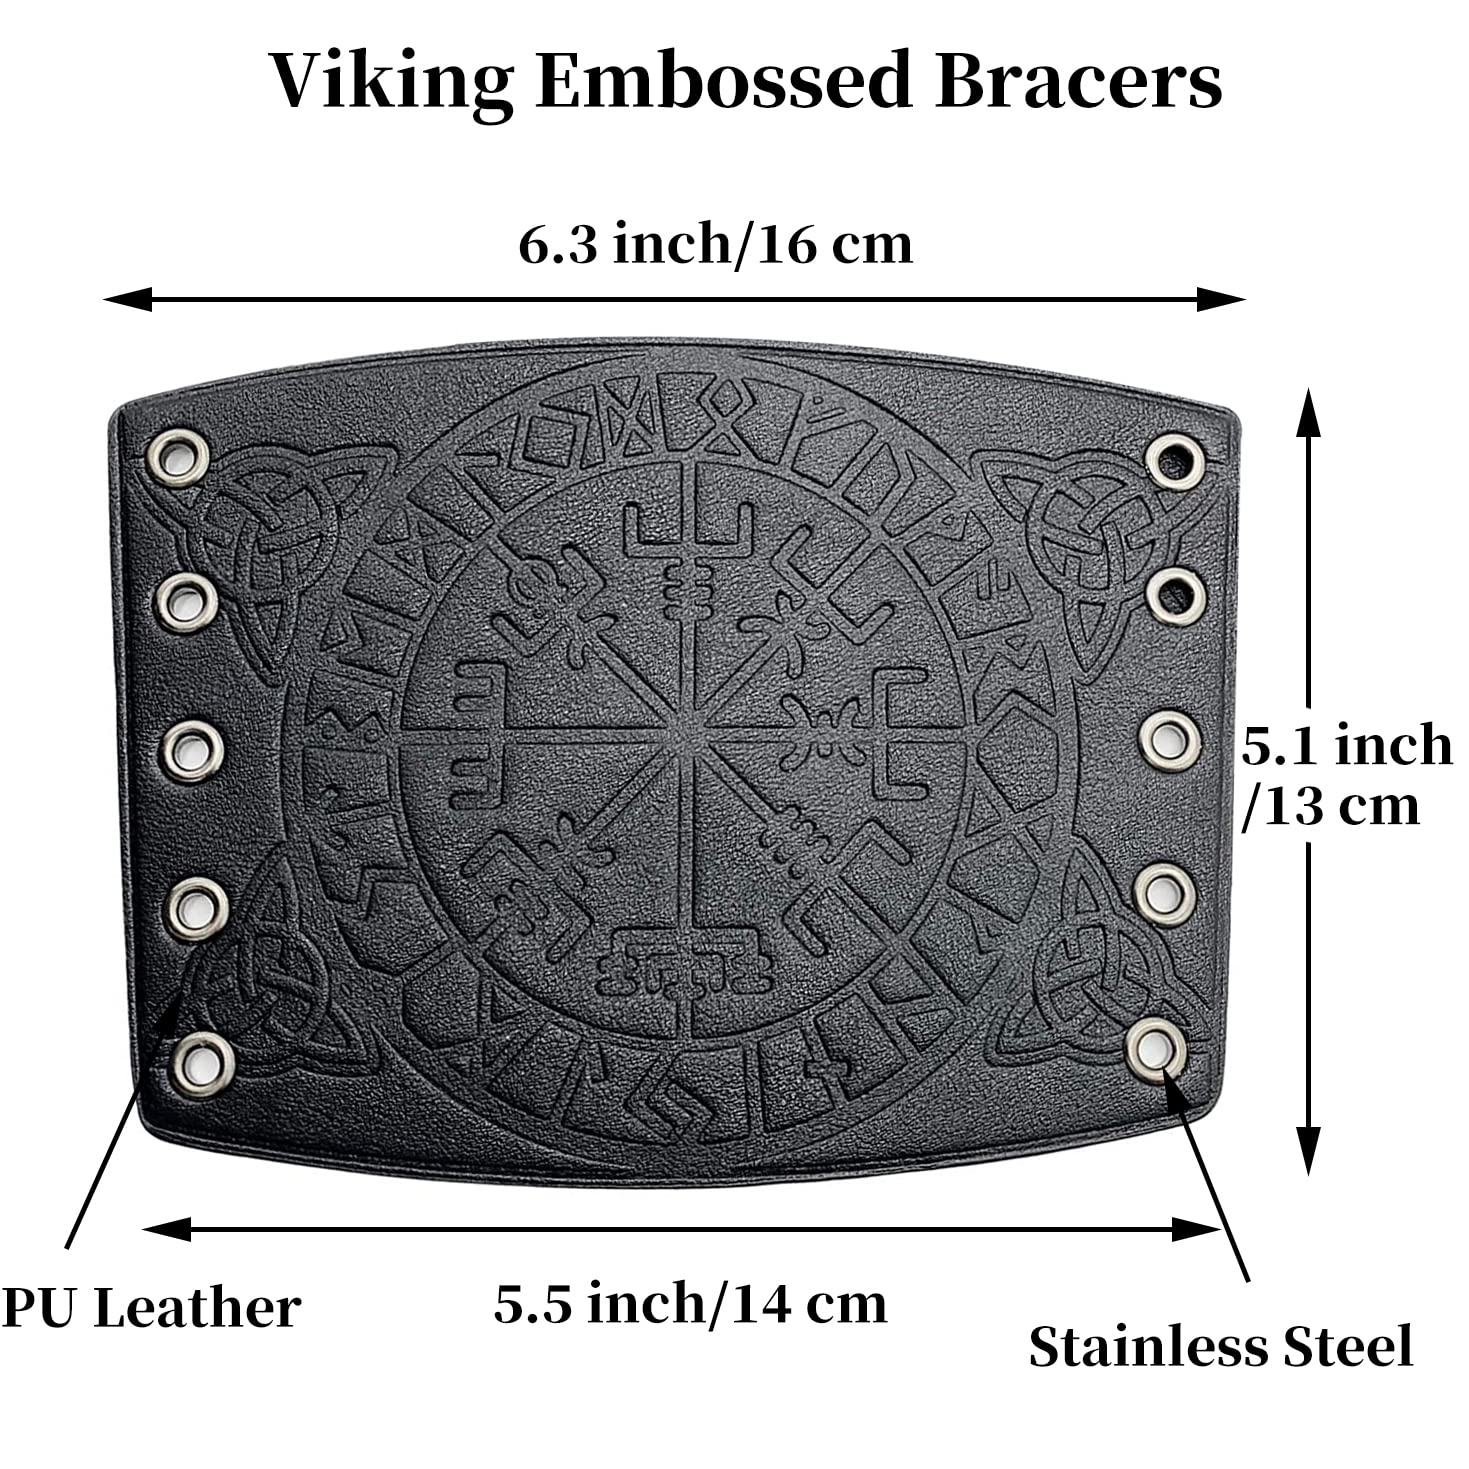 KelaJuan PU Leather Medieval Bracers with Bandage, Solid Color